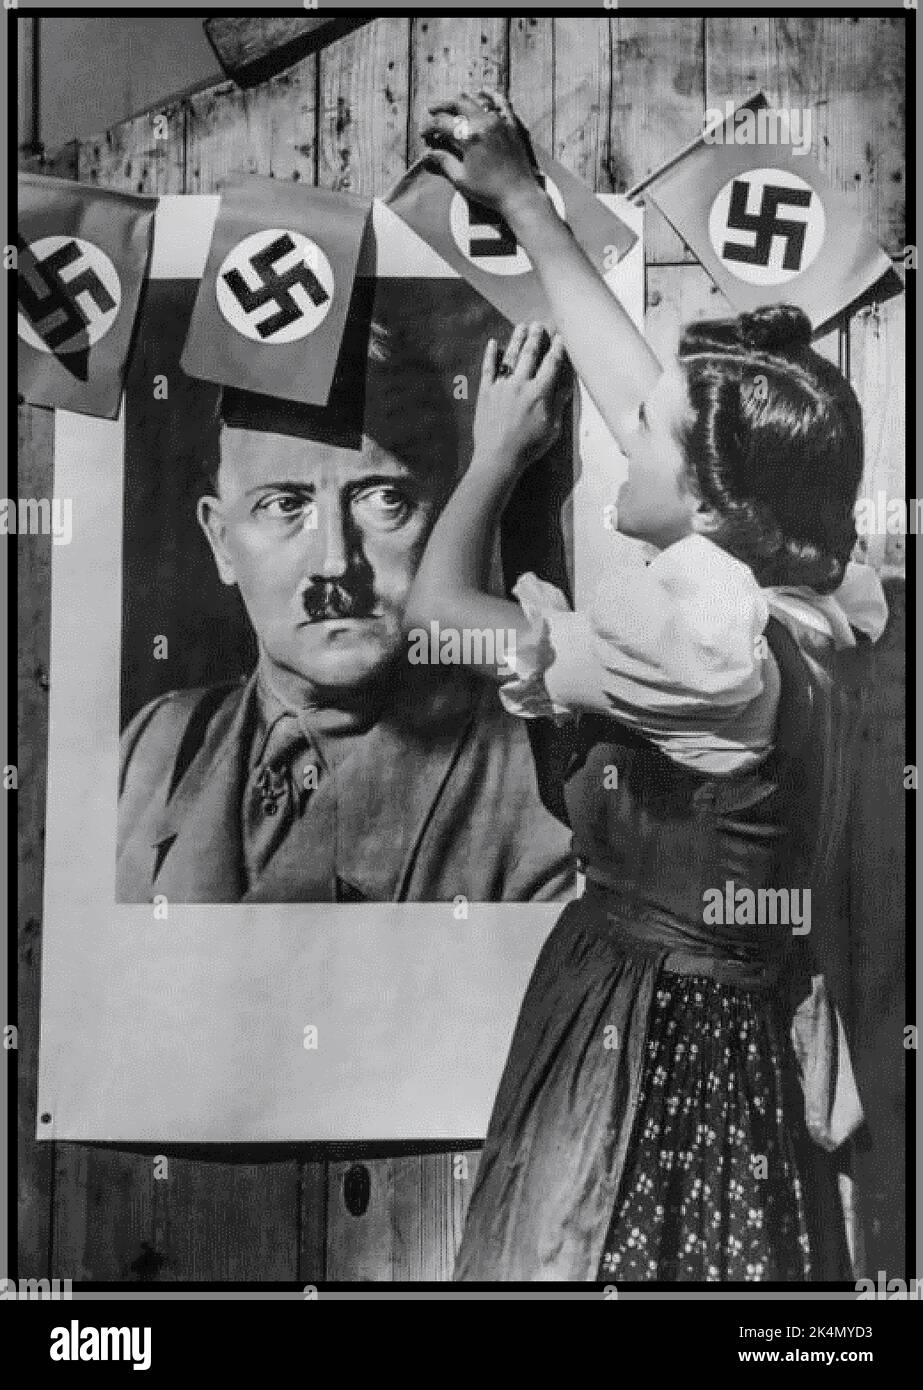 Nazi German Troops occupation with girl in Czechoslovakia dress pinning celebratory swastika flags around portrait of Adolf Hitler in military uniform to show support for Nazi Germany 1938 Sudetenland Czechoslovakia Stock Photo